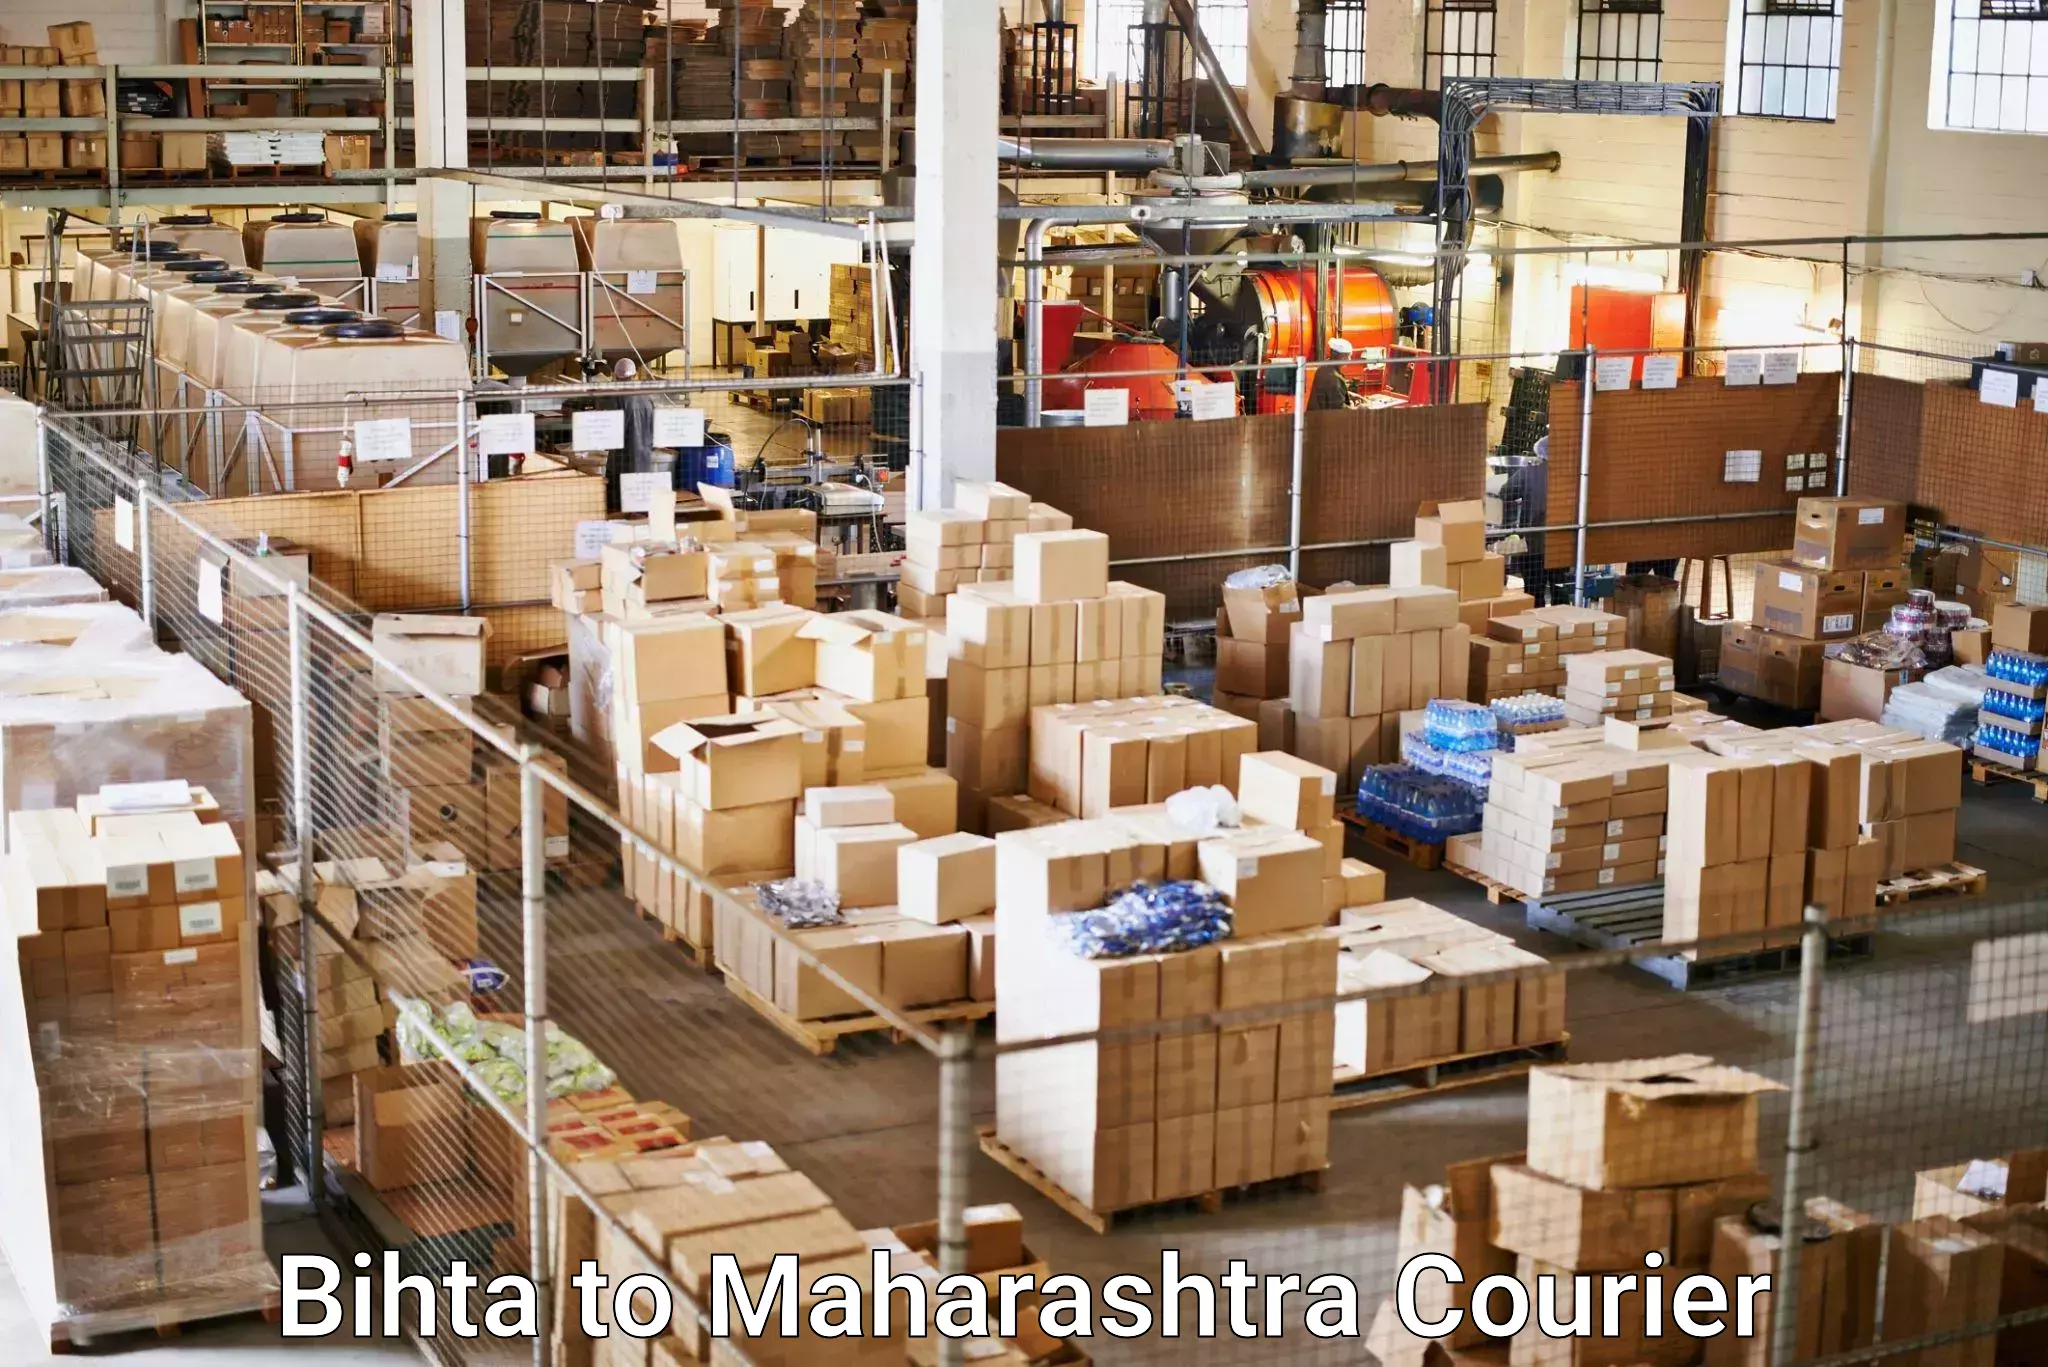 State-of-the-art courier technology Bihta to Navi Mumbai